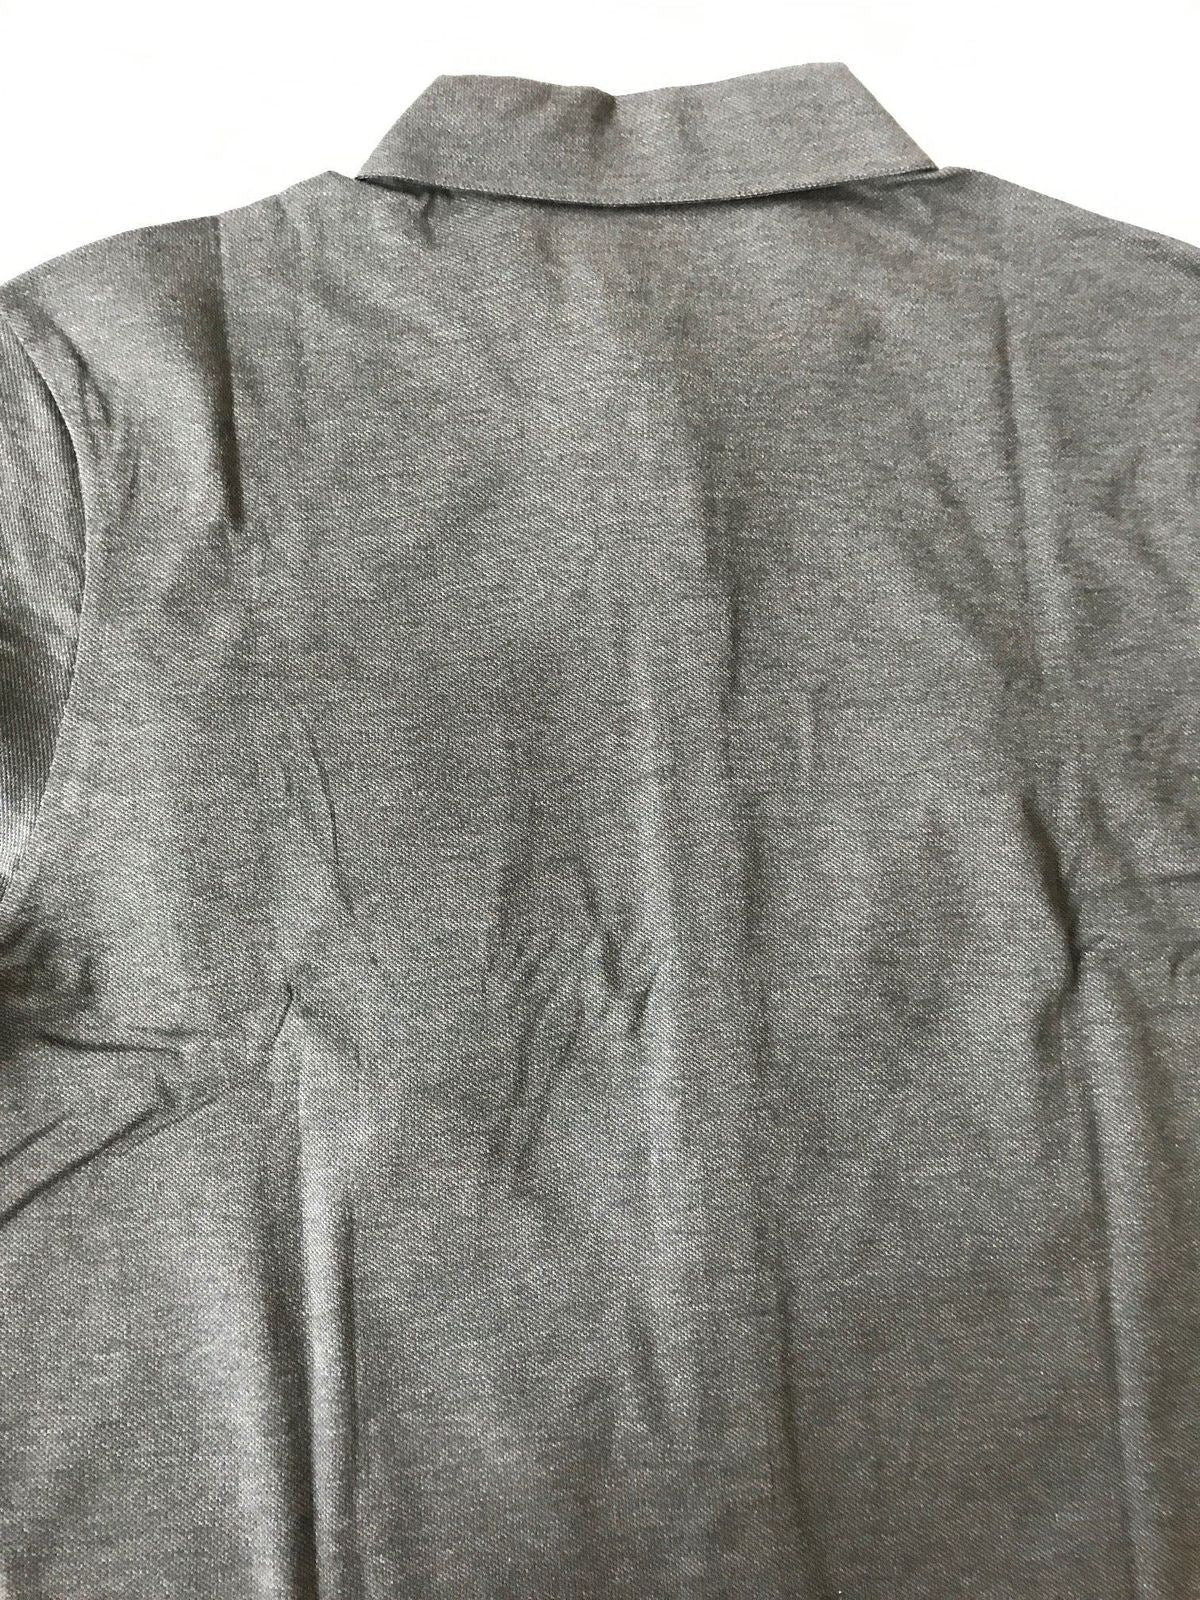 NWT $195 BOSS Hugo Boss 'Onara-01' Black Label Long Sleeve Slim Fit Shirt L - BAYSUPERSTORE